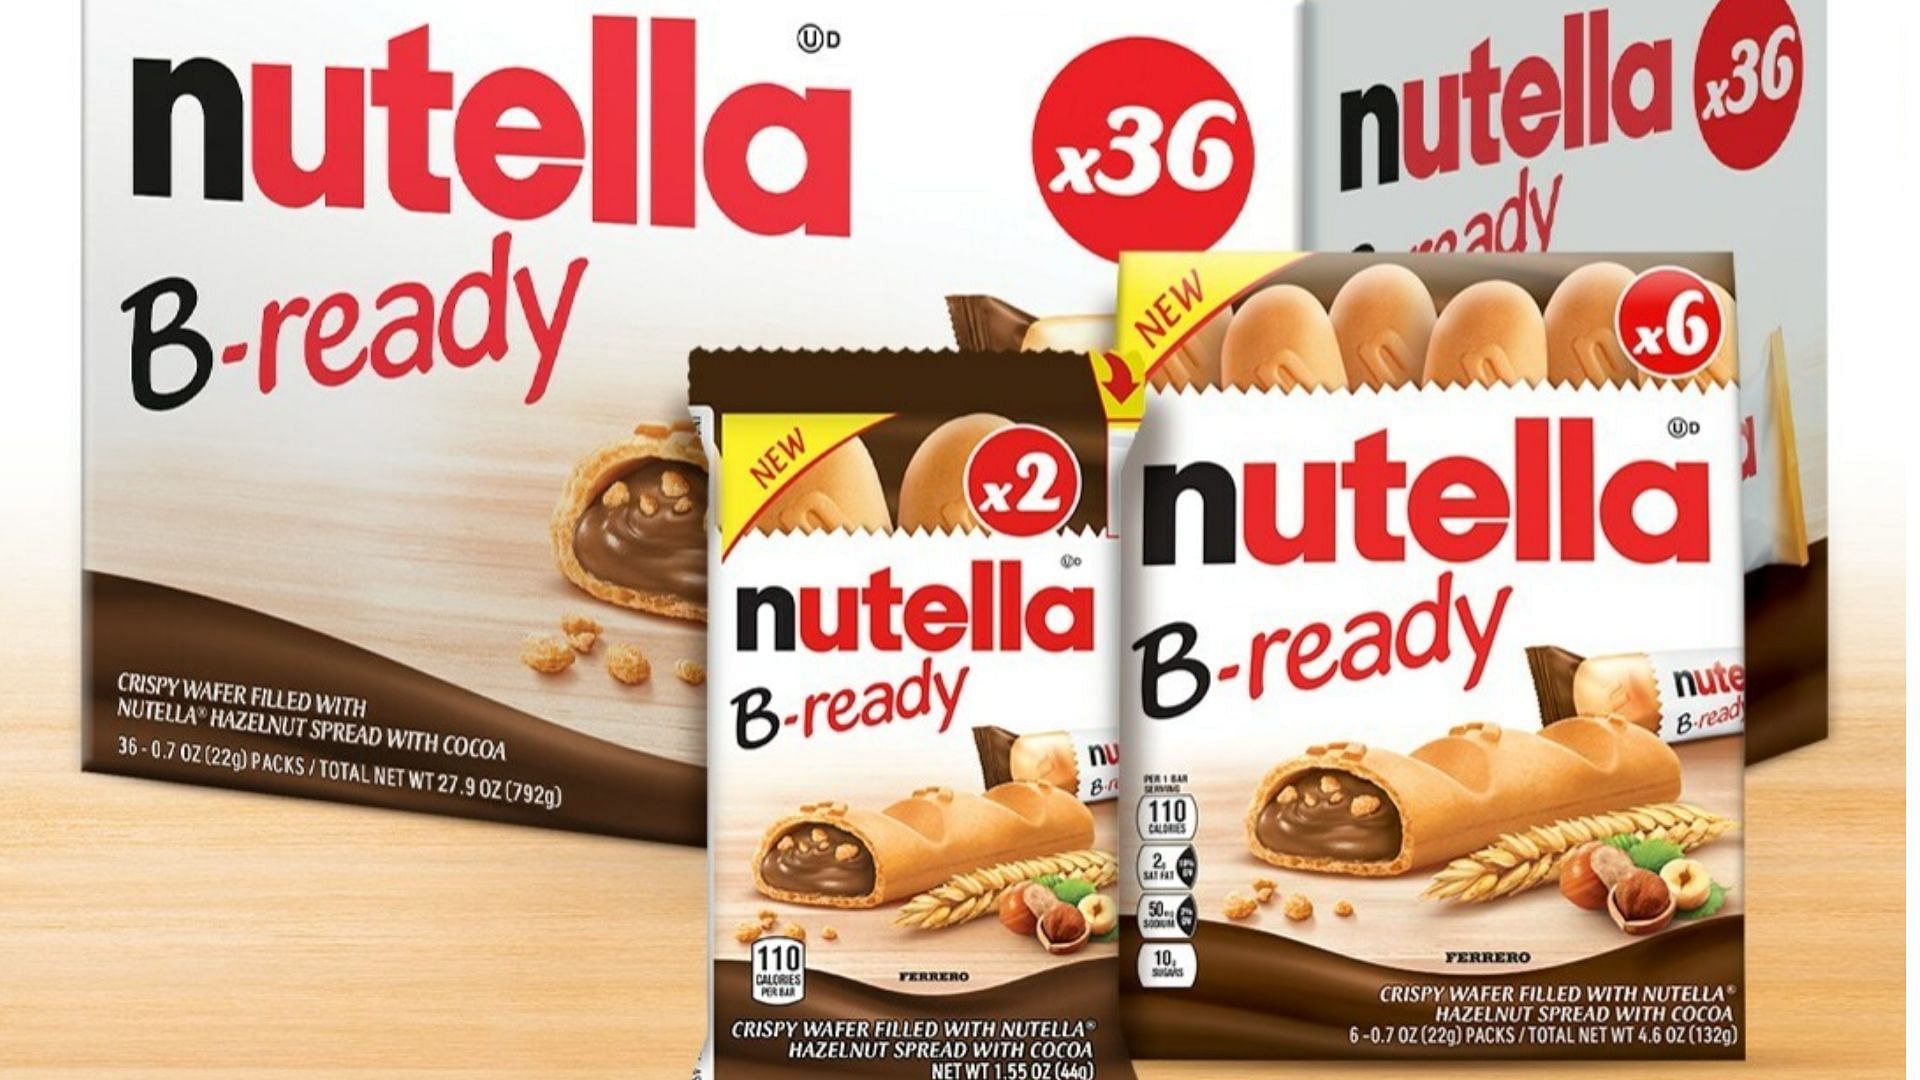 enjoy the irresistible B-Ready snack anywhere, anytime (Image via Nutella)